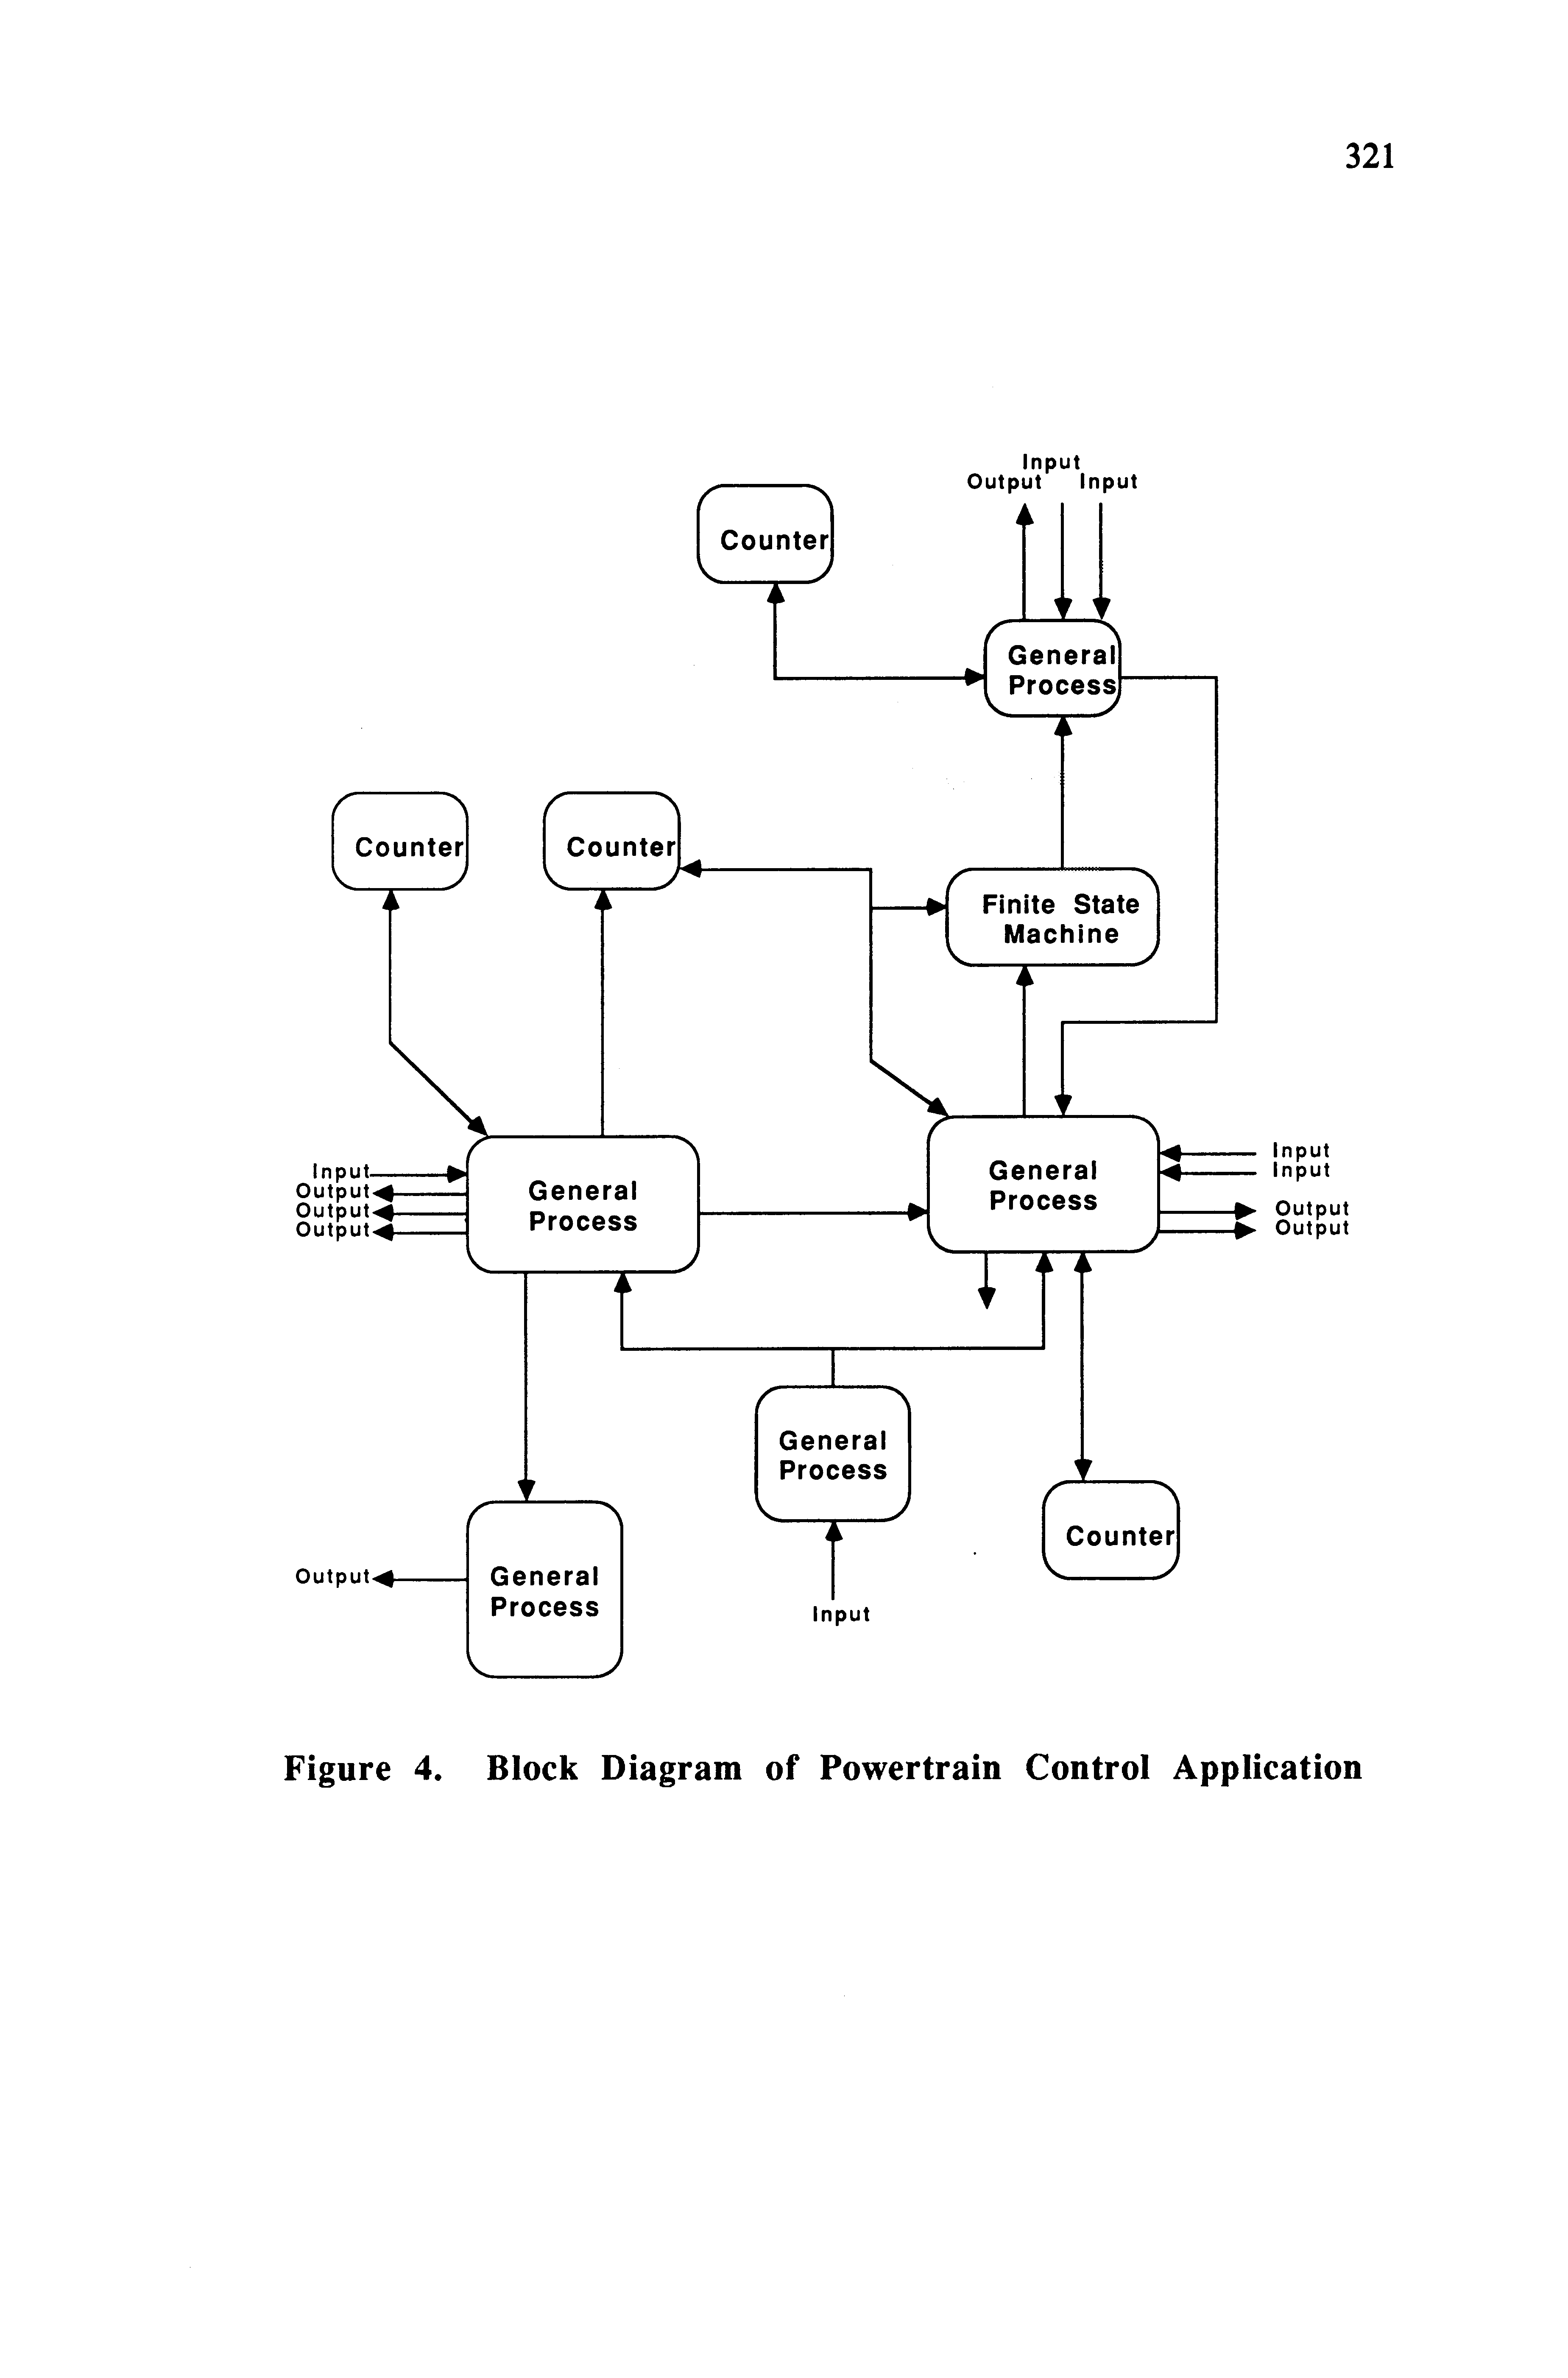 Figure 4. Block Diagram of Powertrain Control Application...